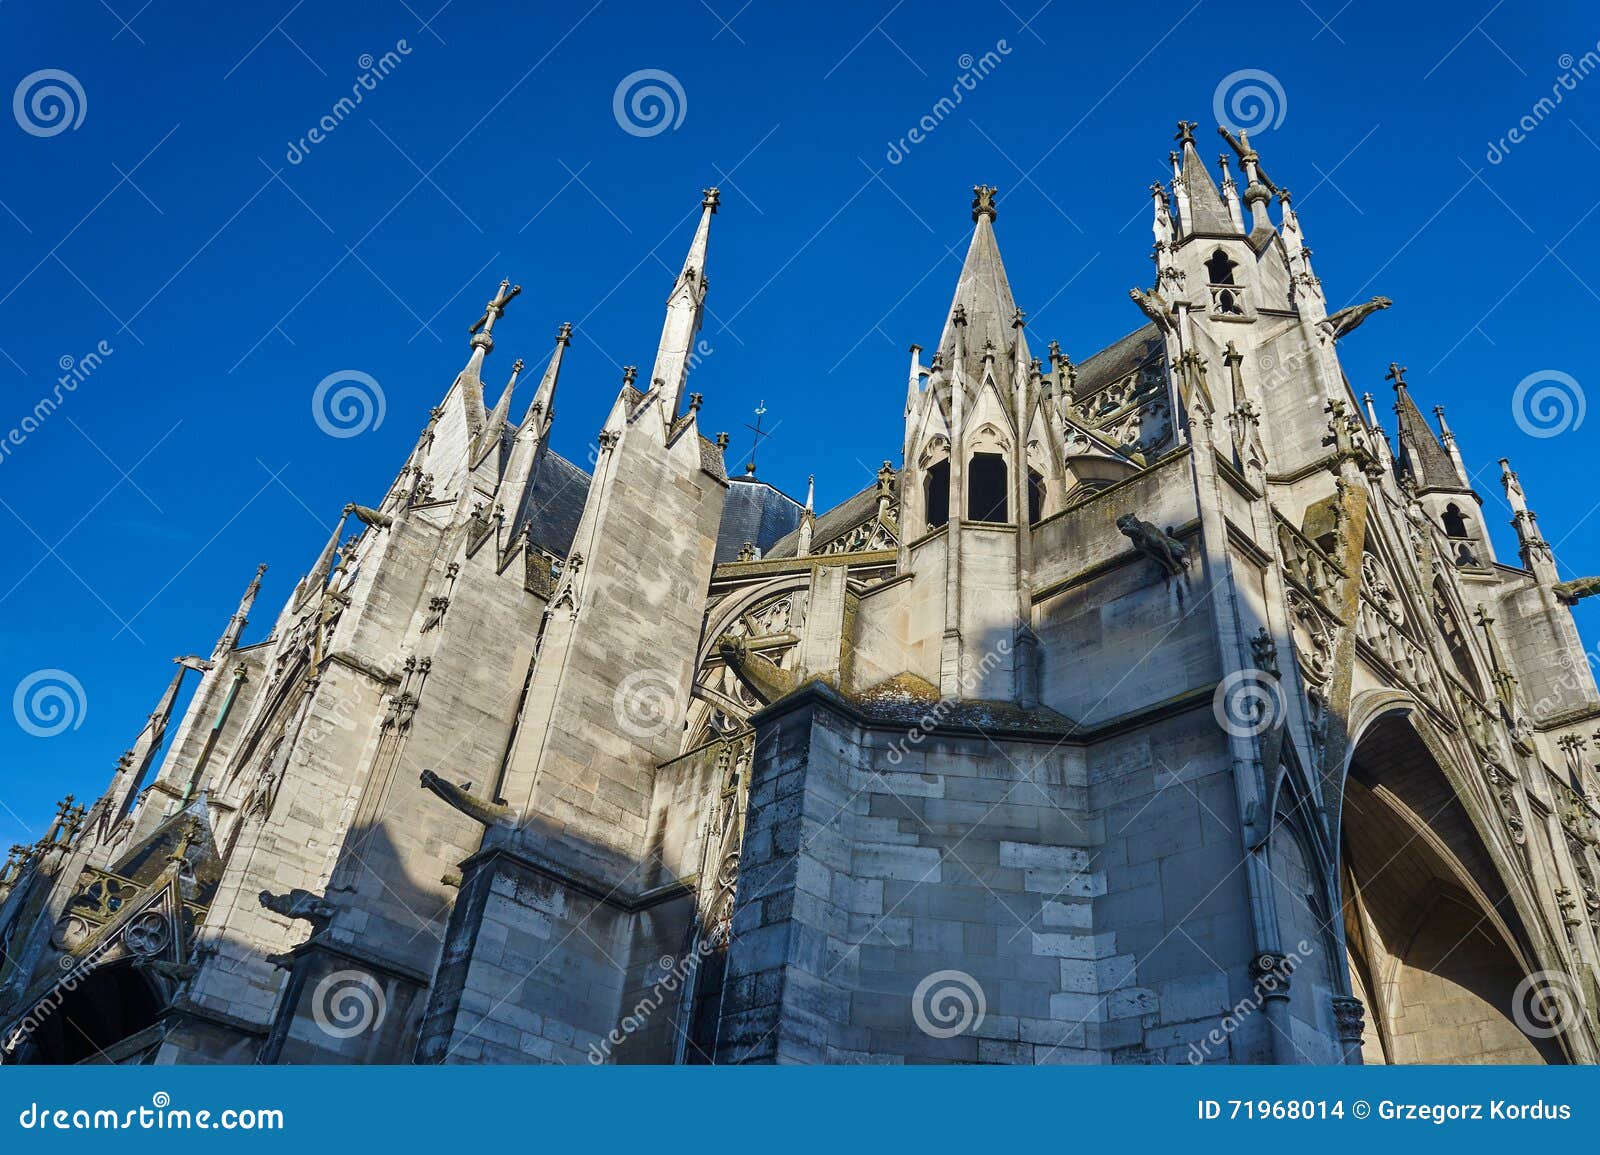 gothic saint-urbain basilica